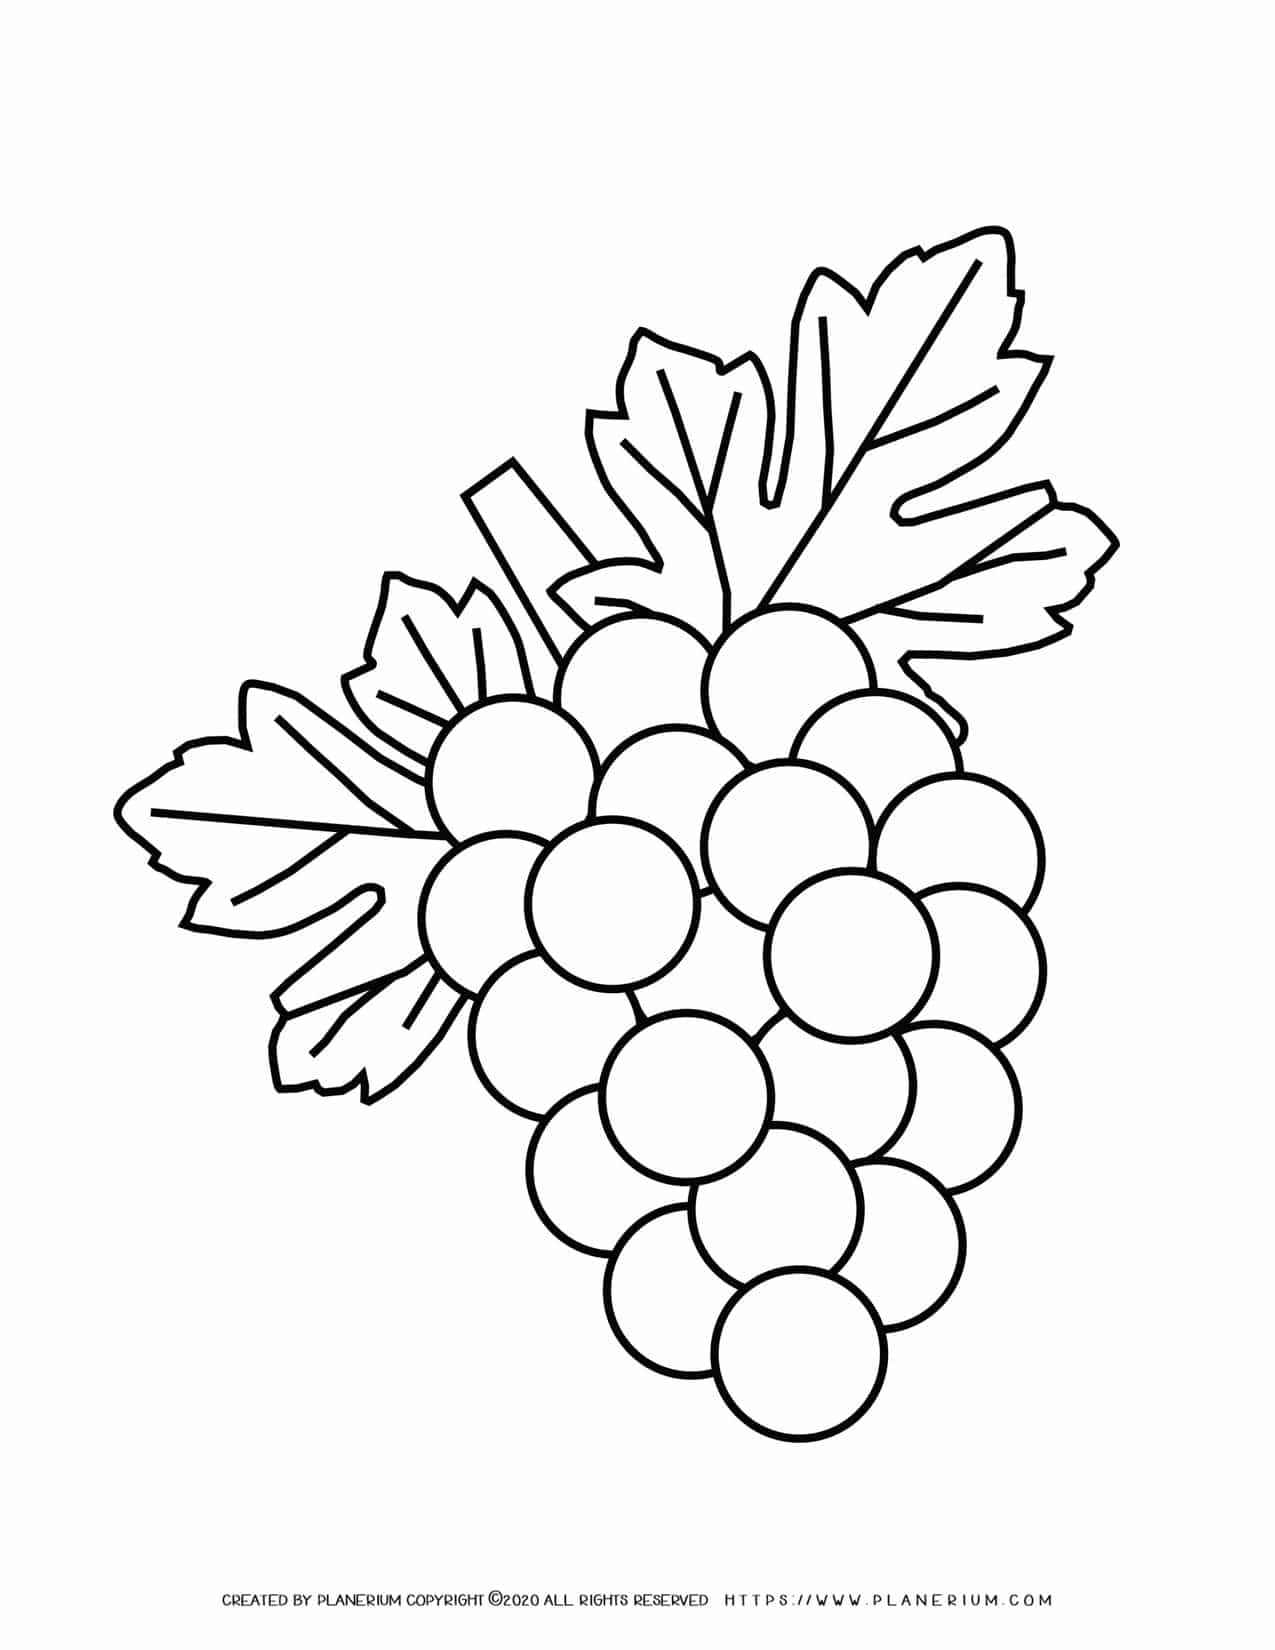 Grapes - Coloring page | Planerium